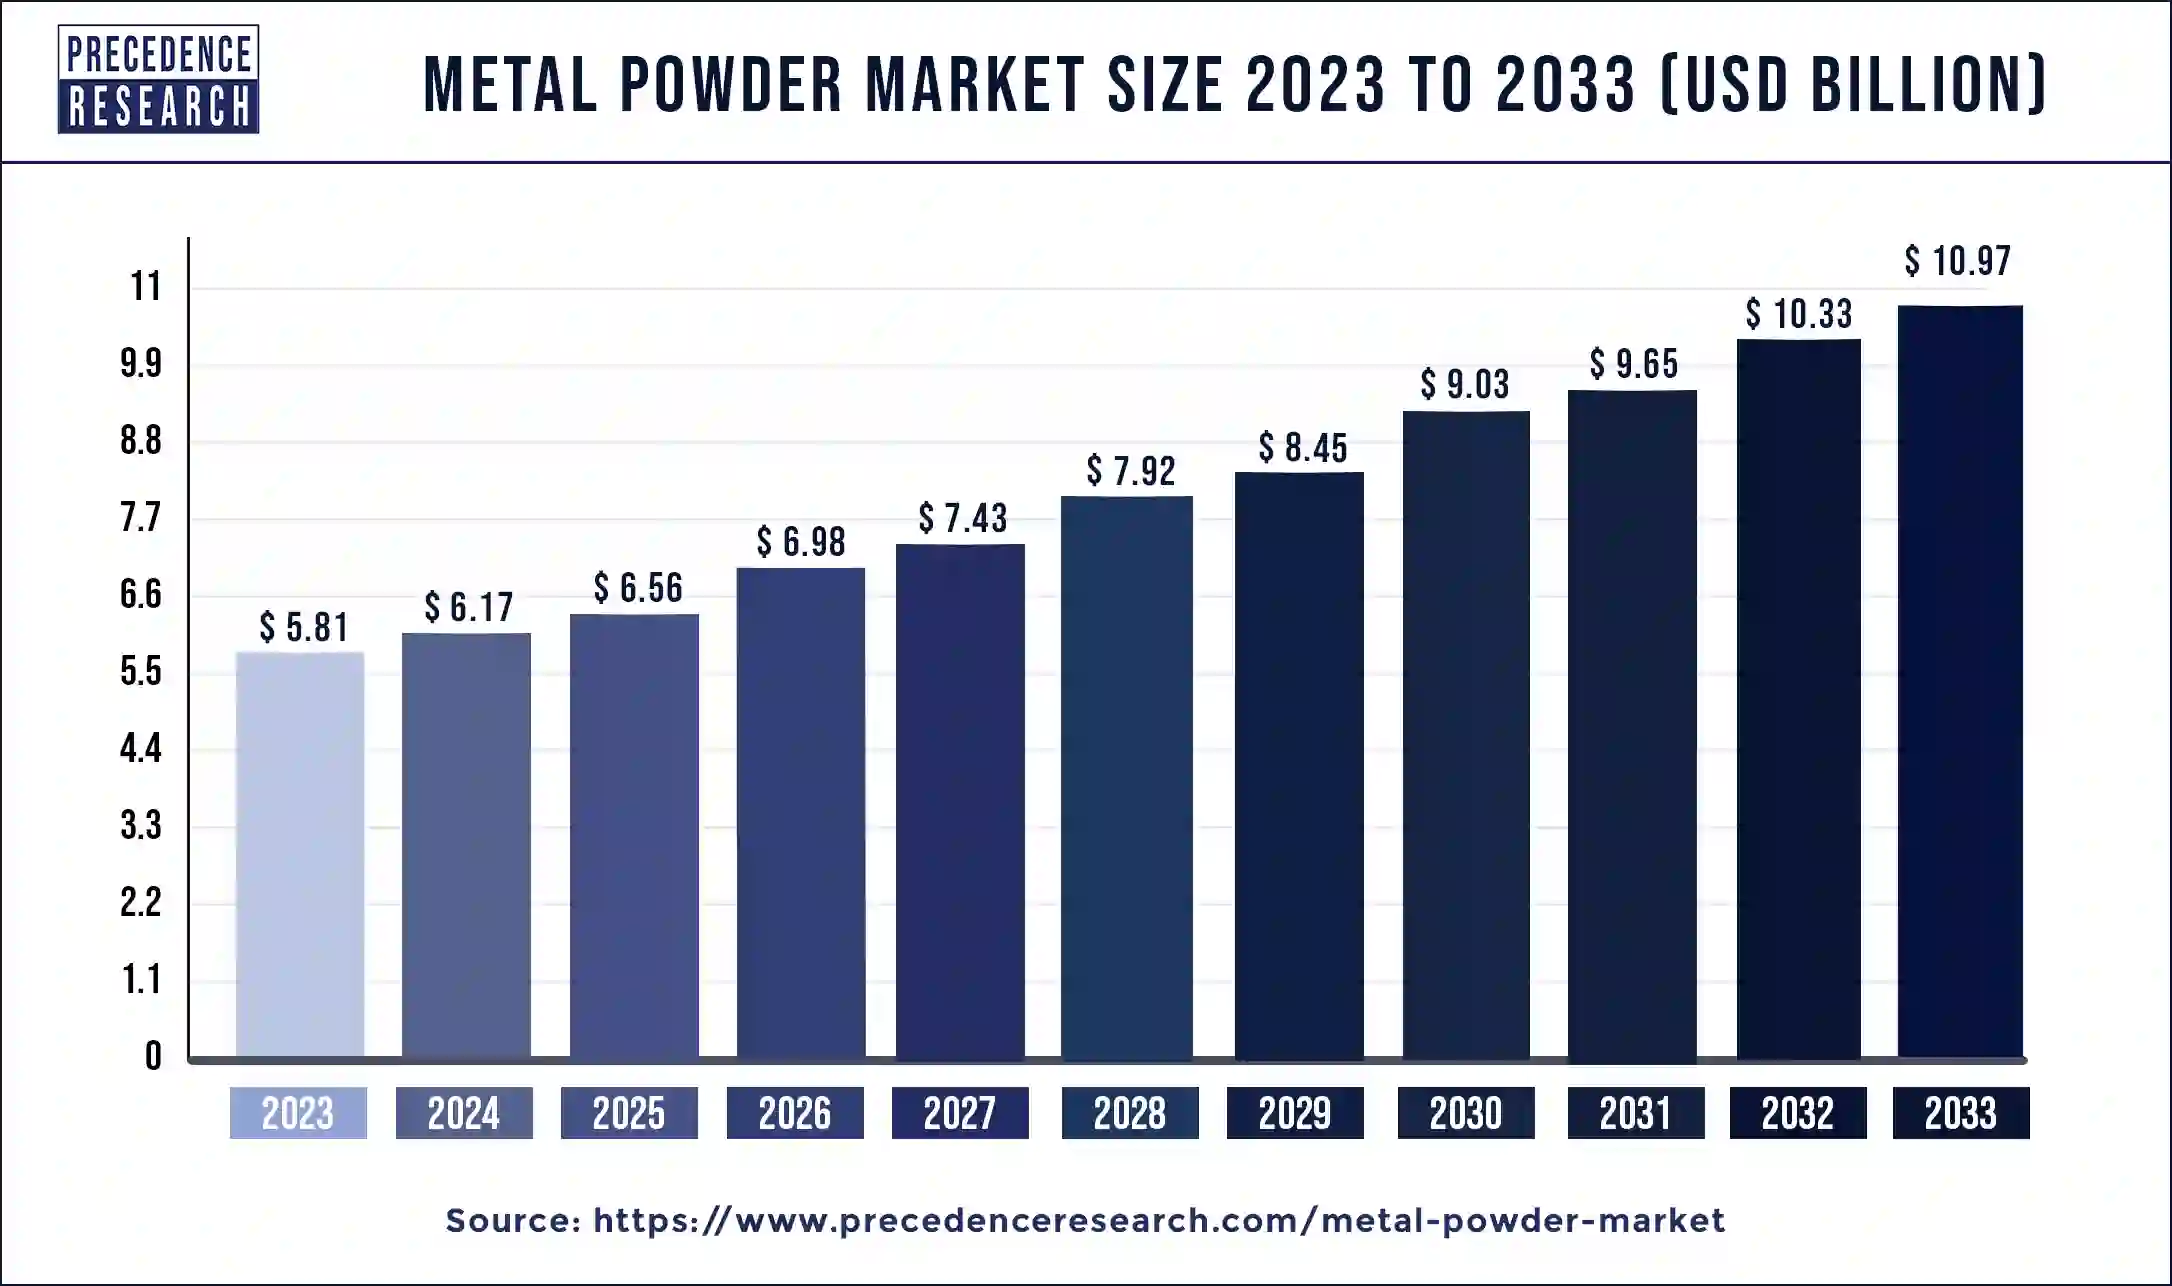 Metal Powder Market Size 2023 to 2032